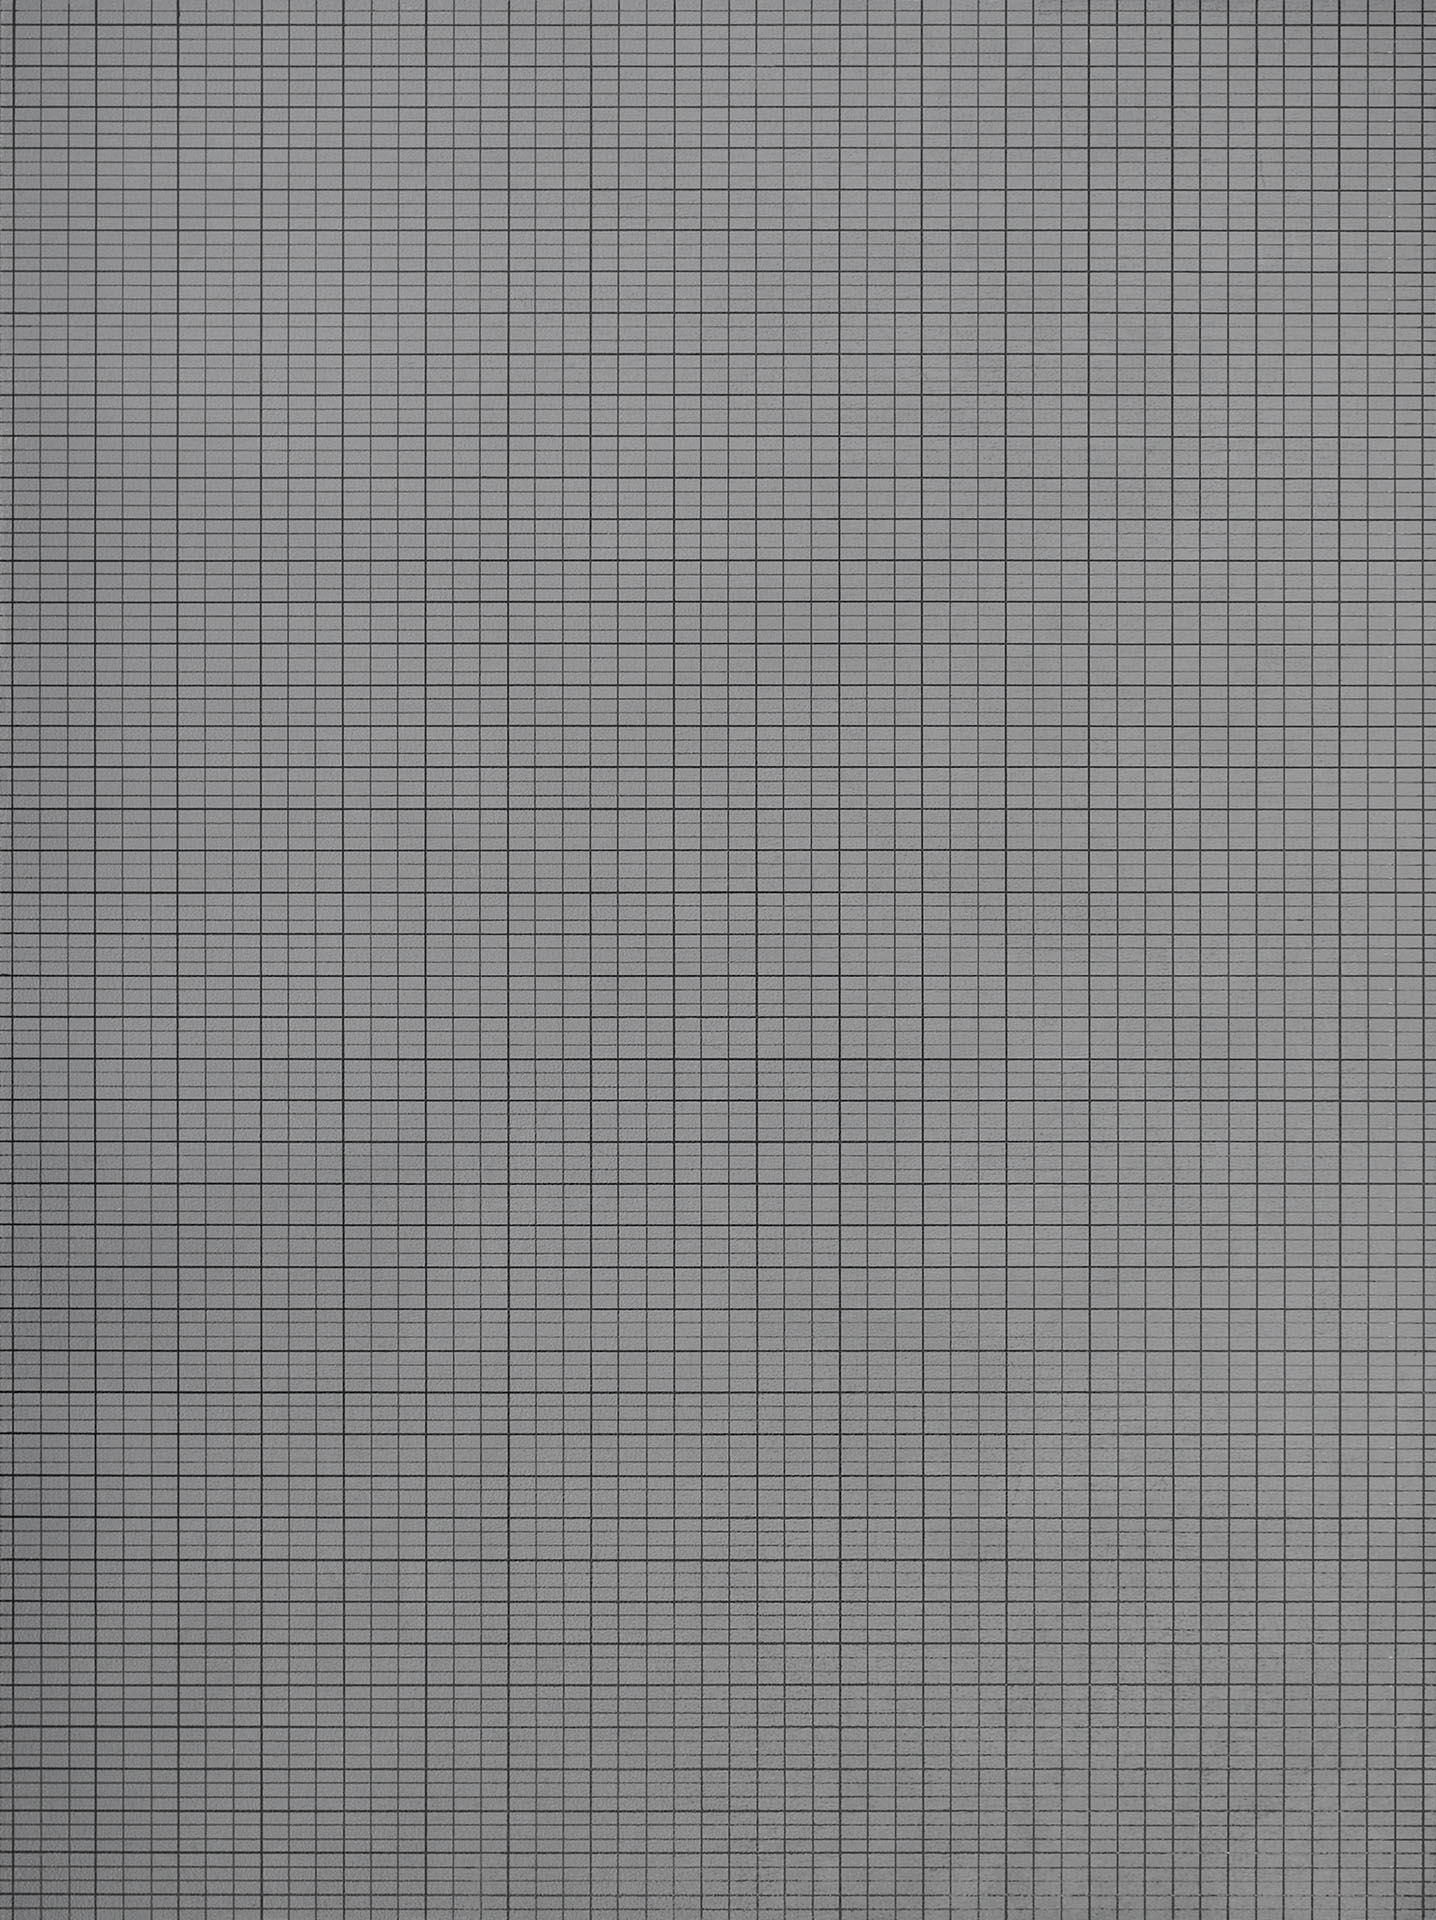  Grid 32, 2014, acrylic on aluminium, 695 x 520mm 